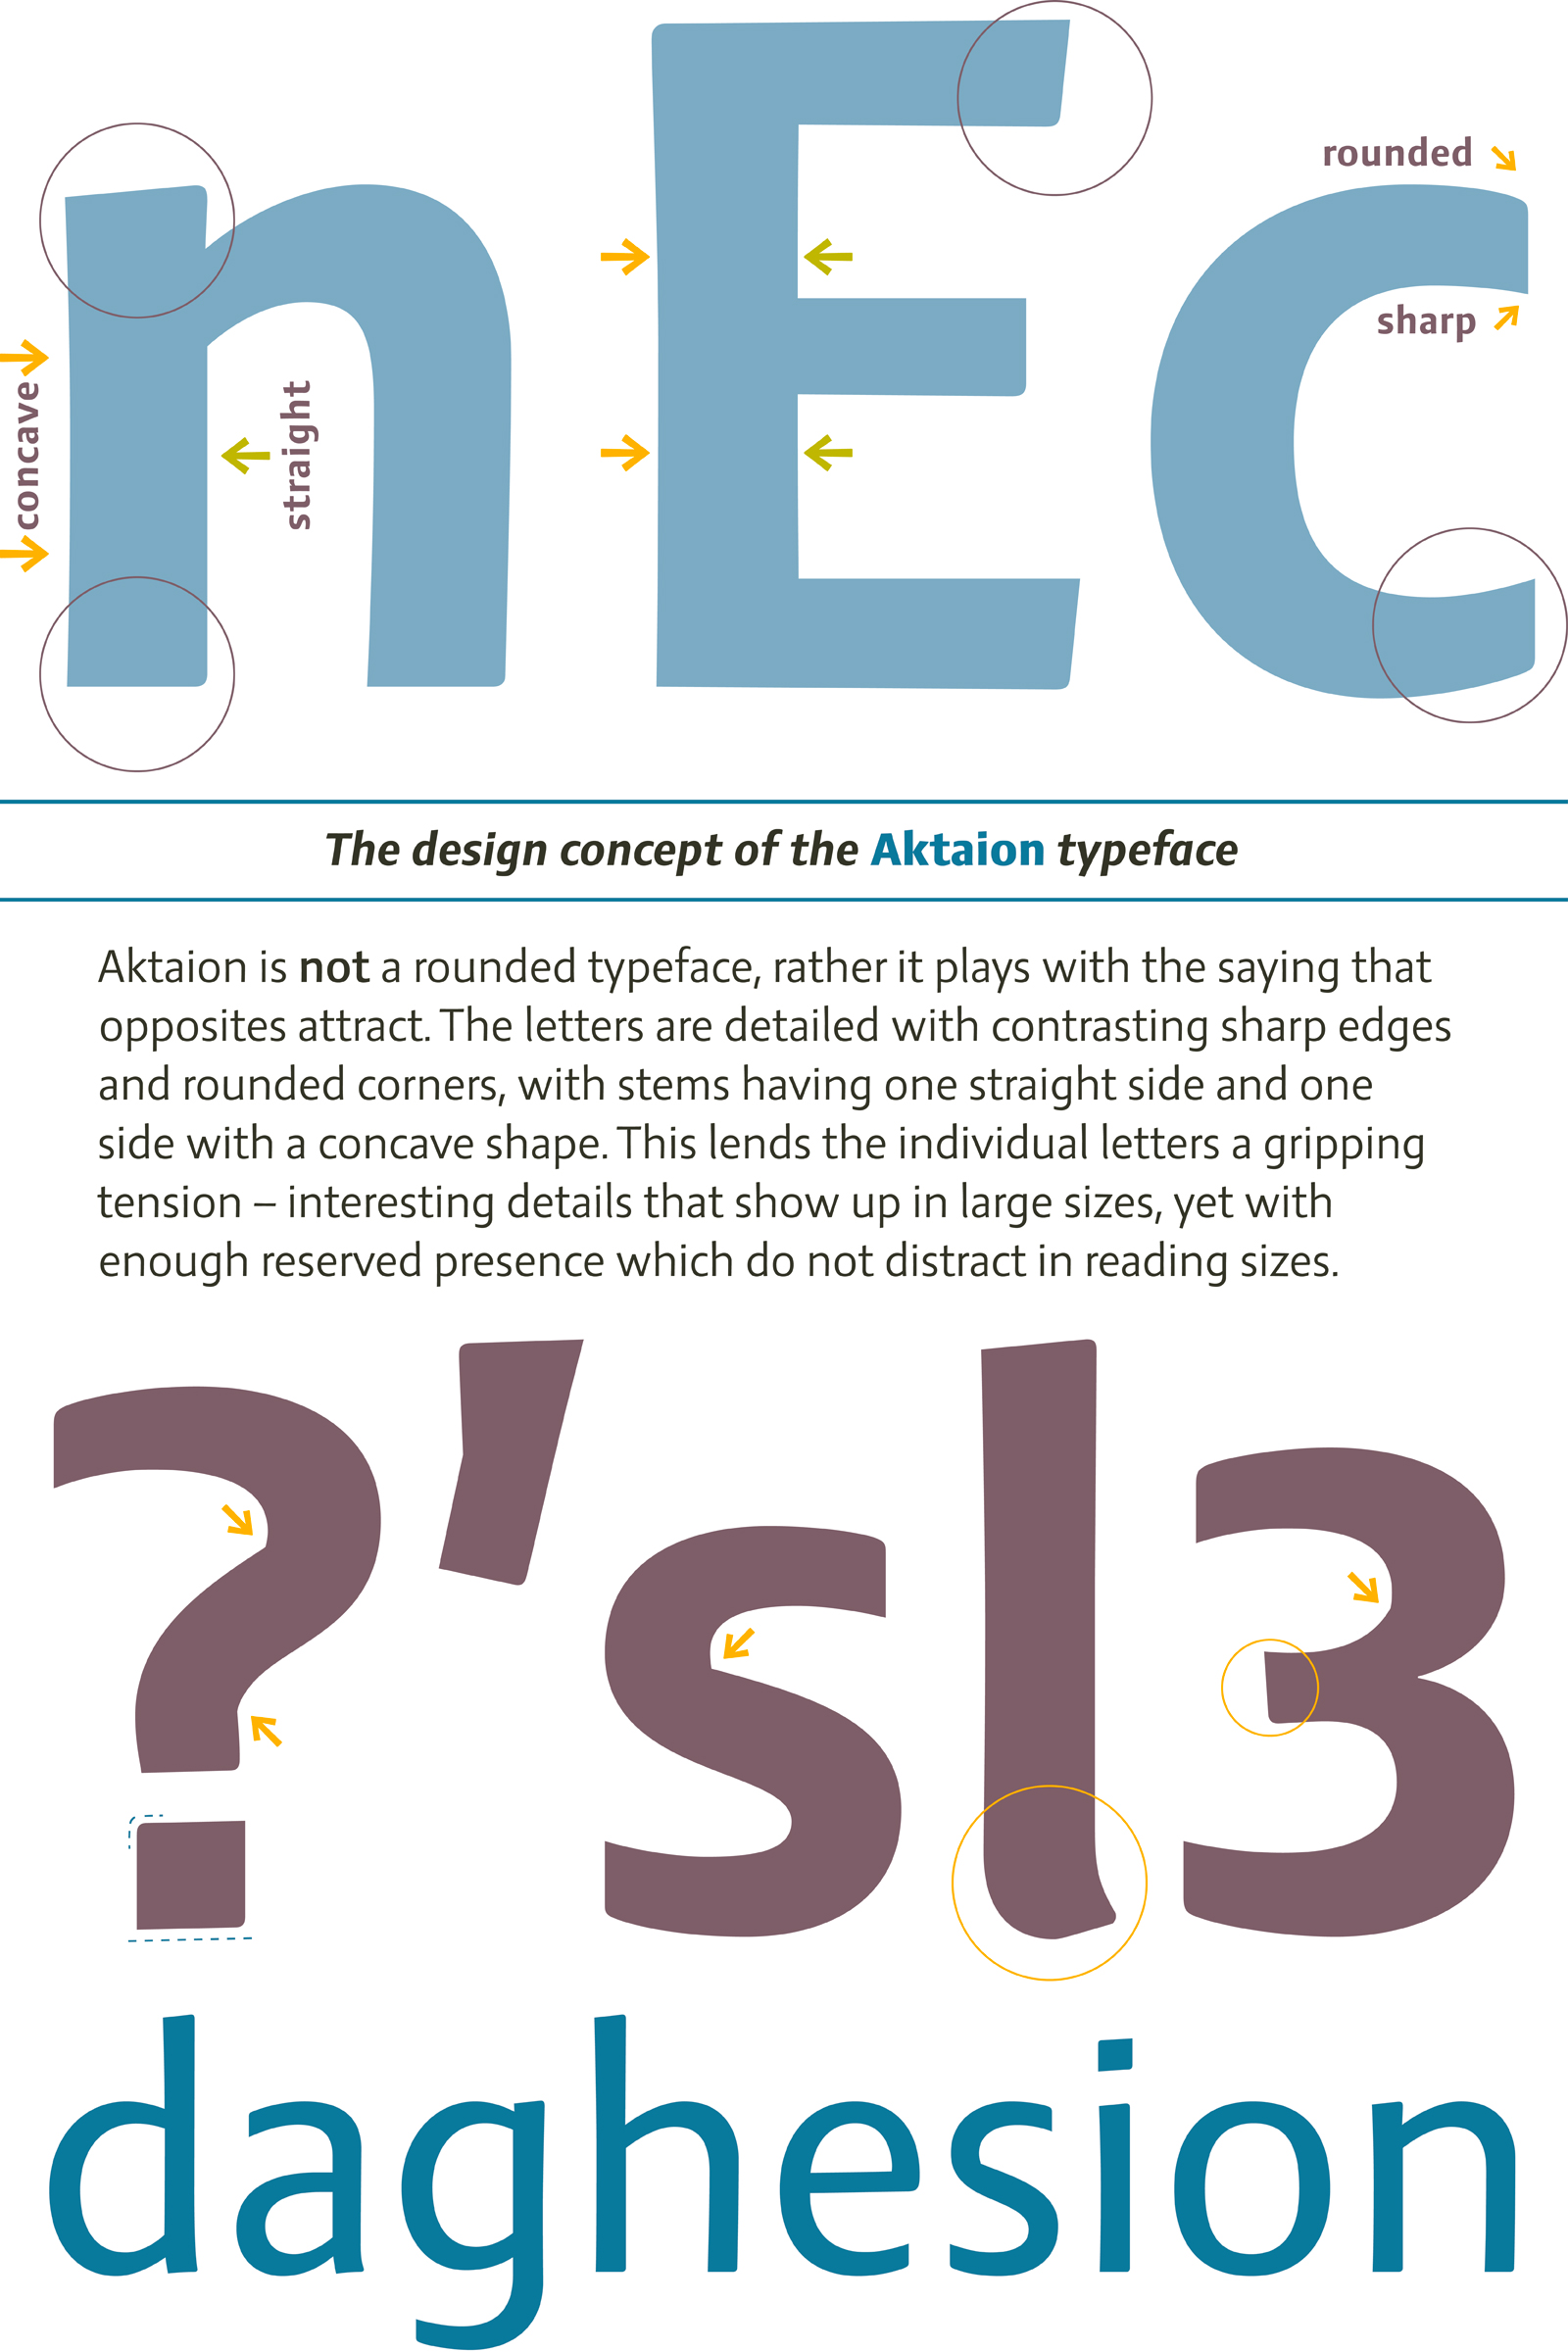 design concept of Aktaion typeface by Jürgen Weltin type matters